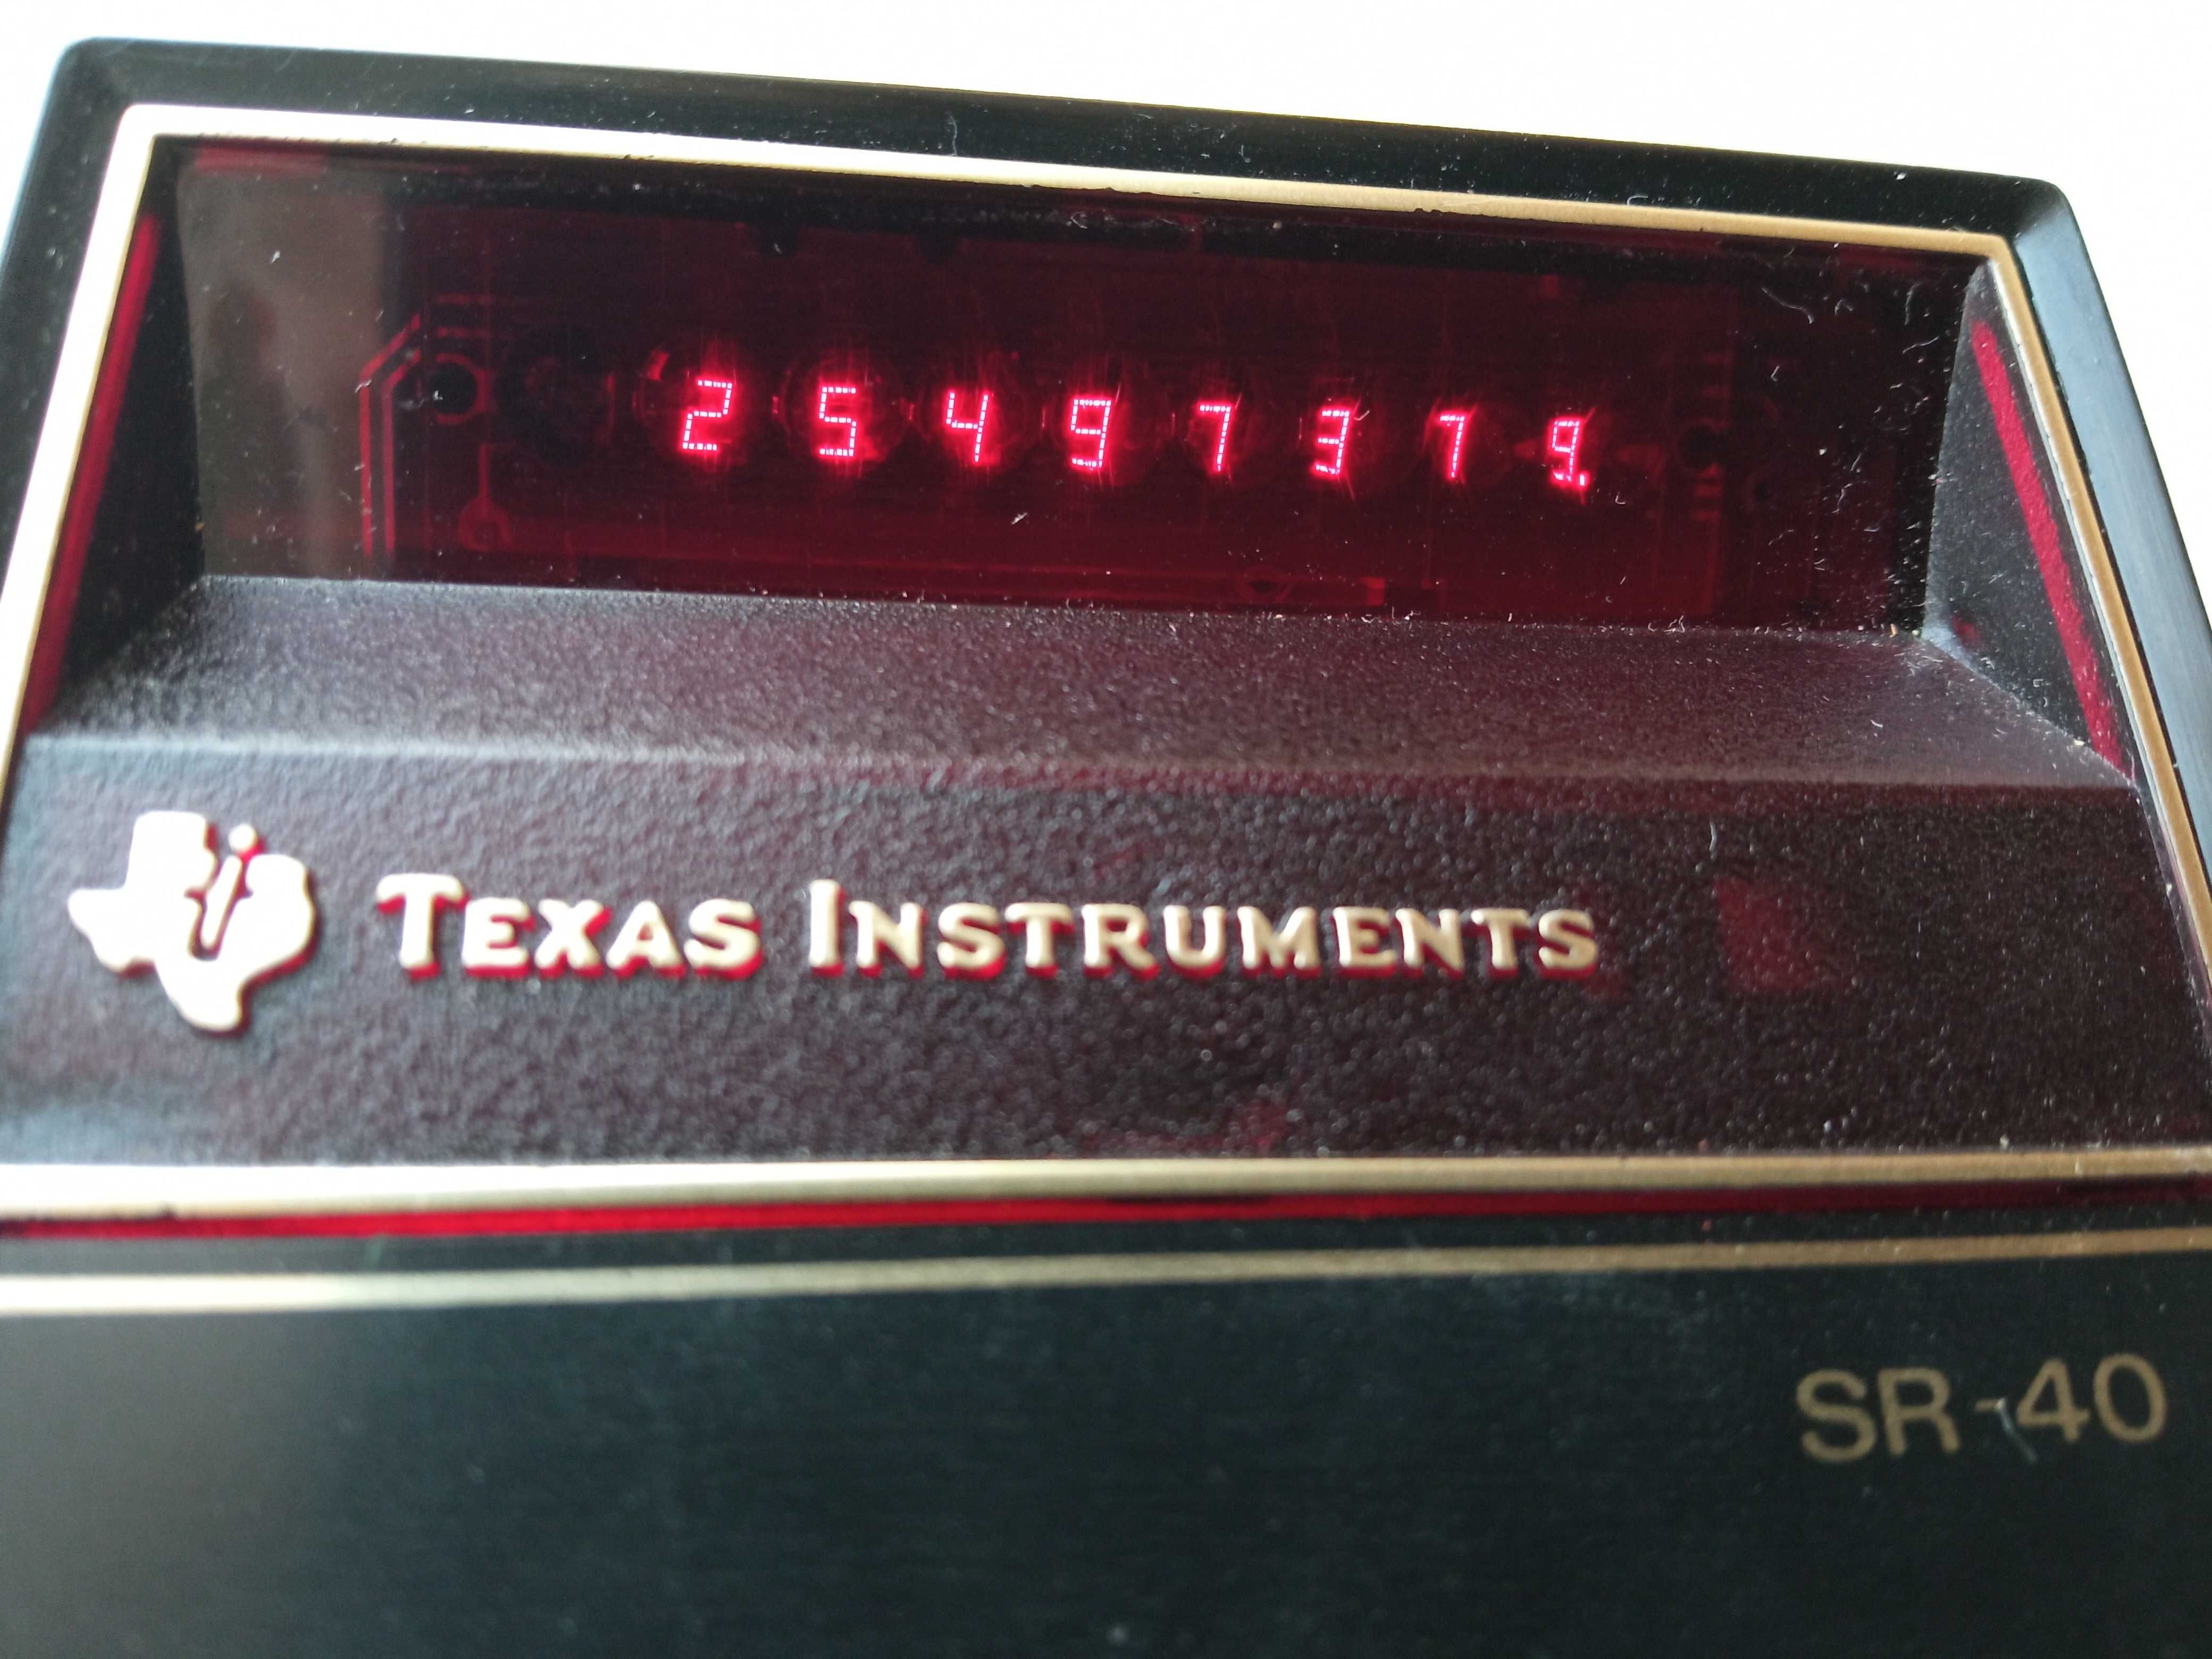 Калькулятор Texas Instruments SR-40